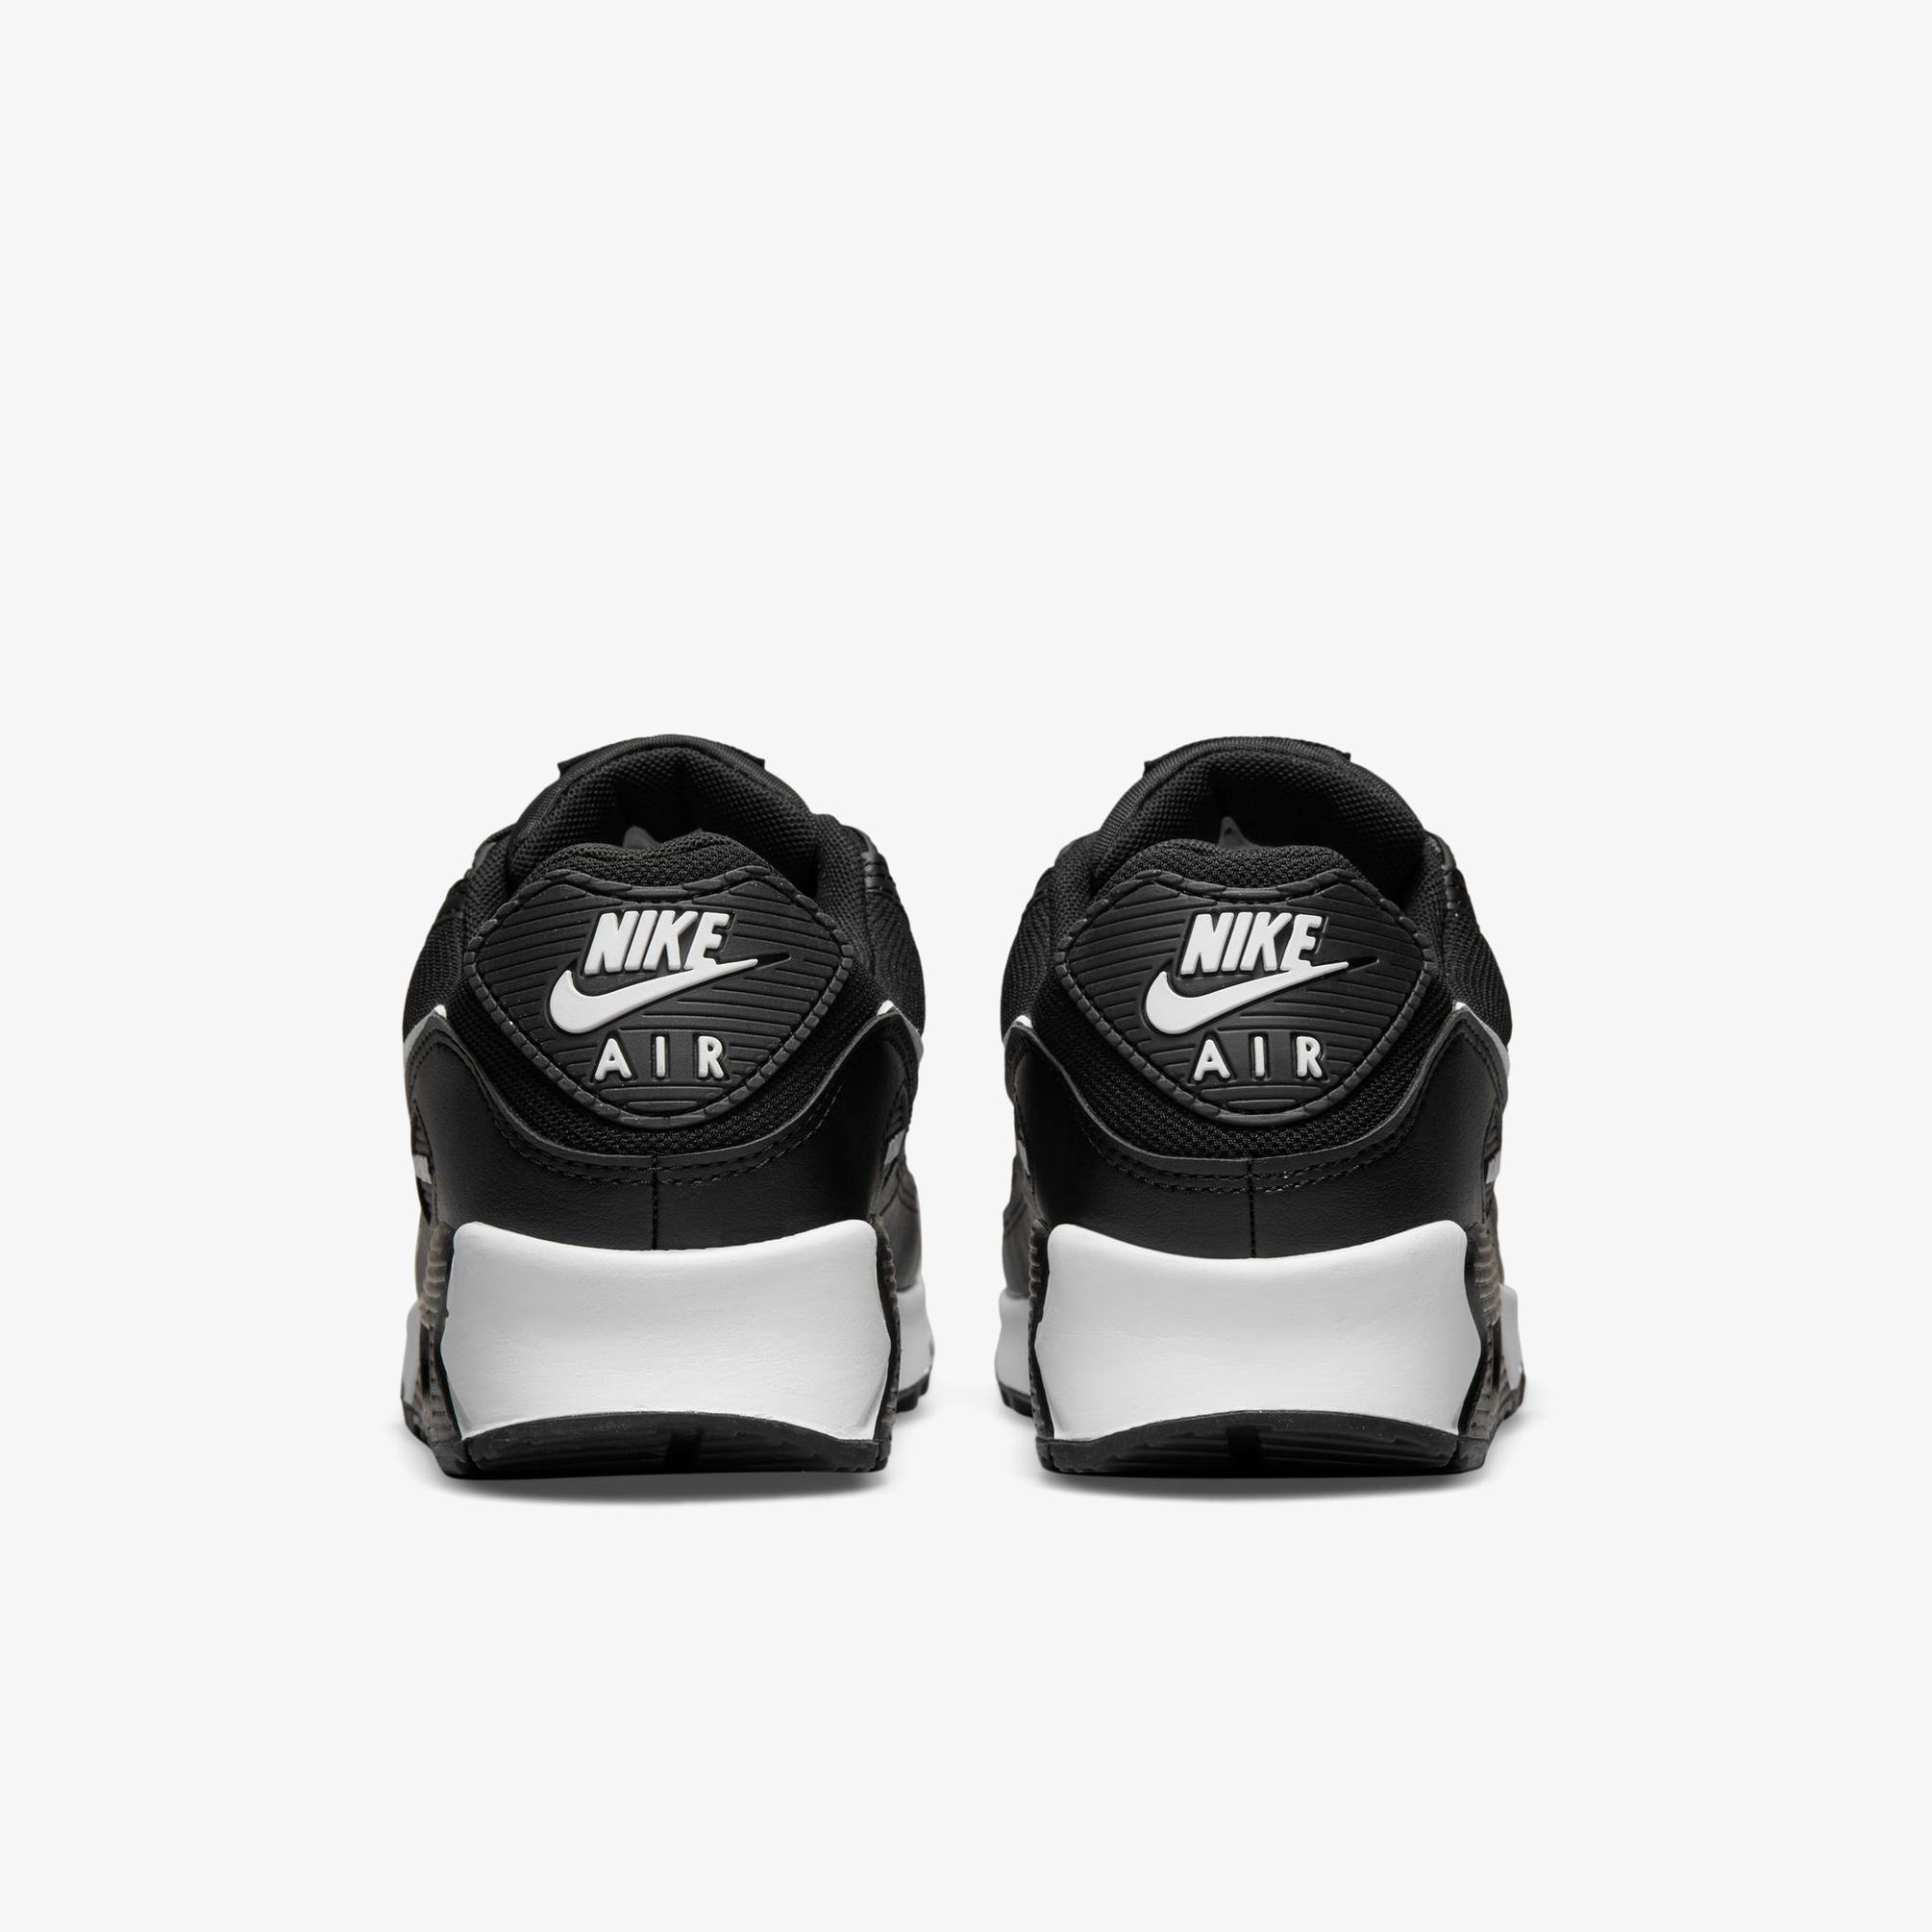  Nike Air Max 90 Kadın Siyah Spor Ayakkabı